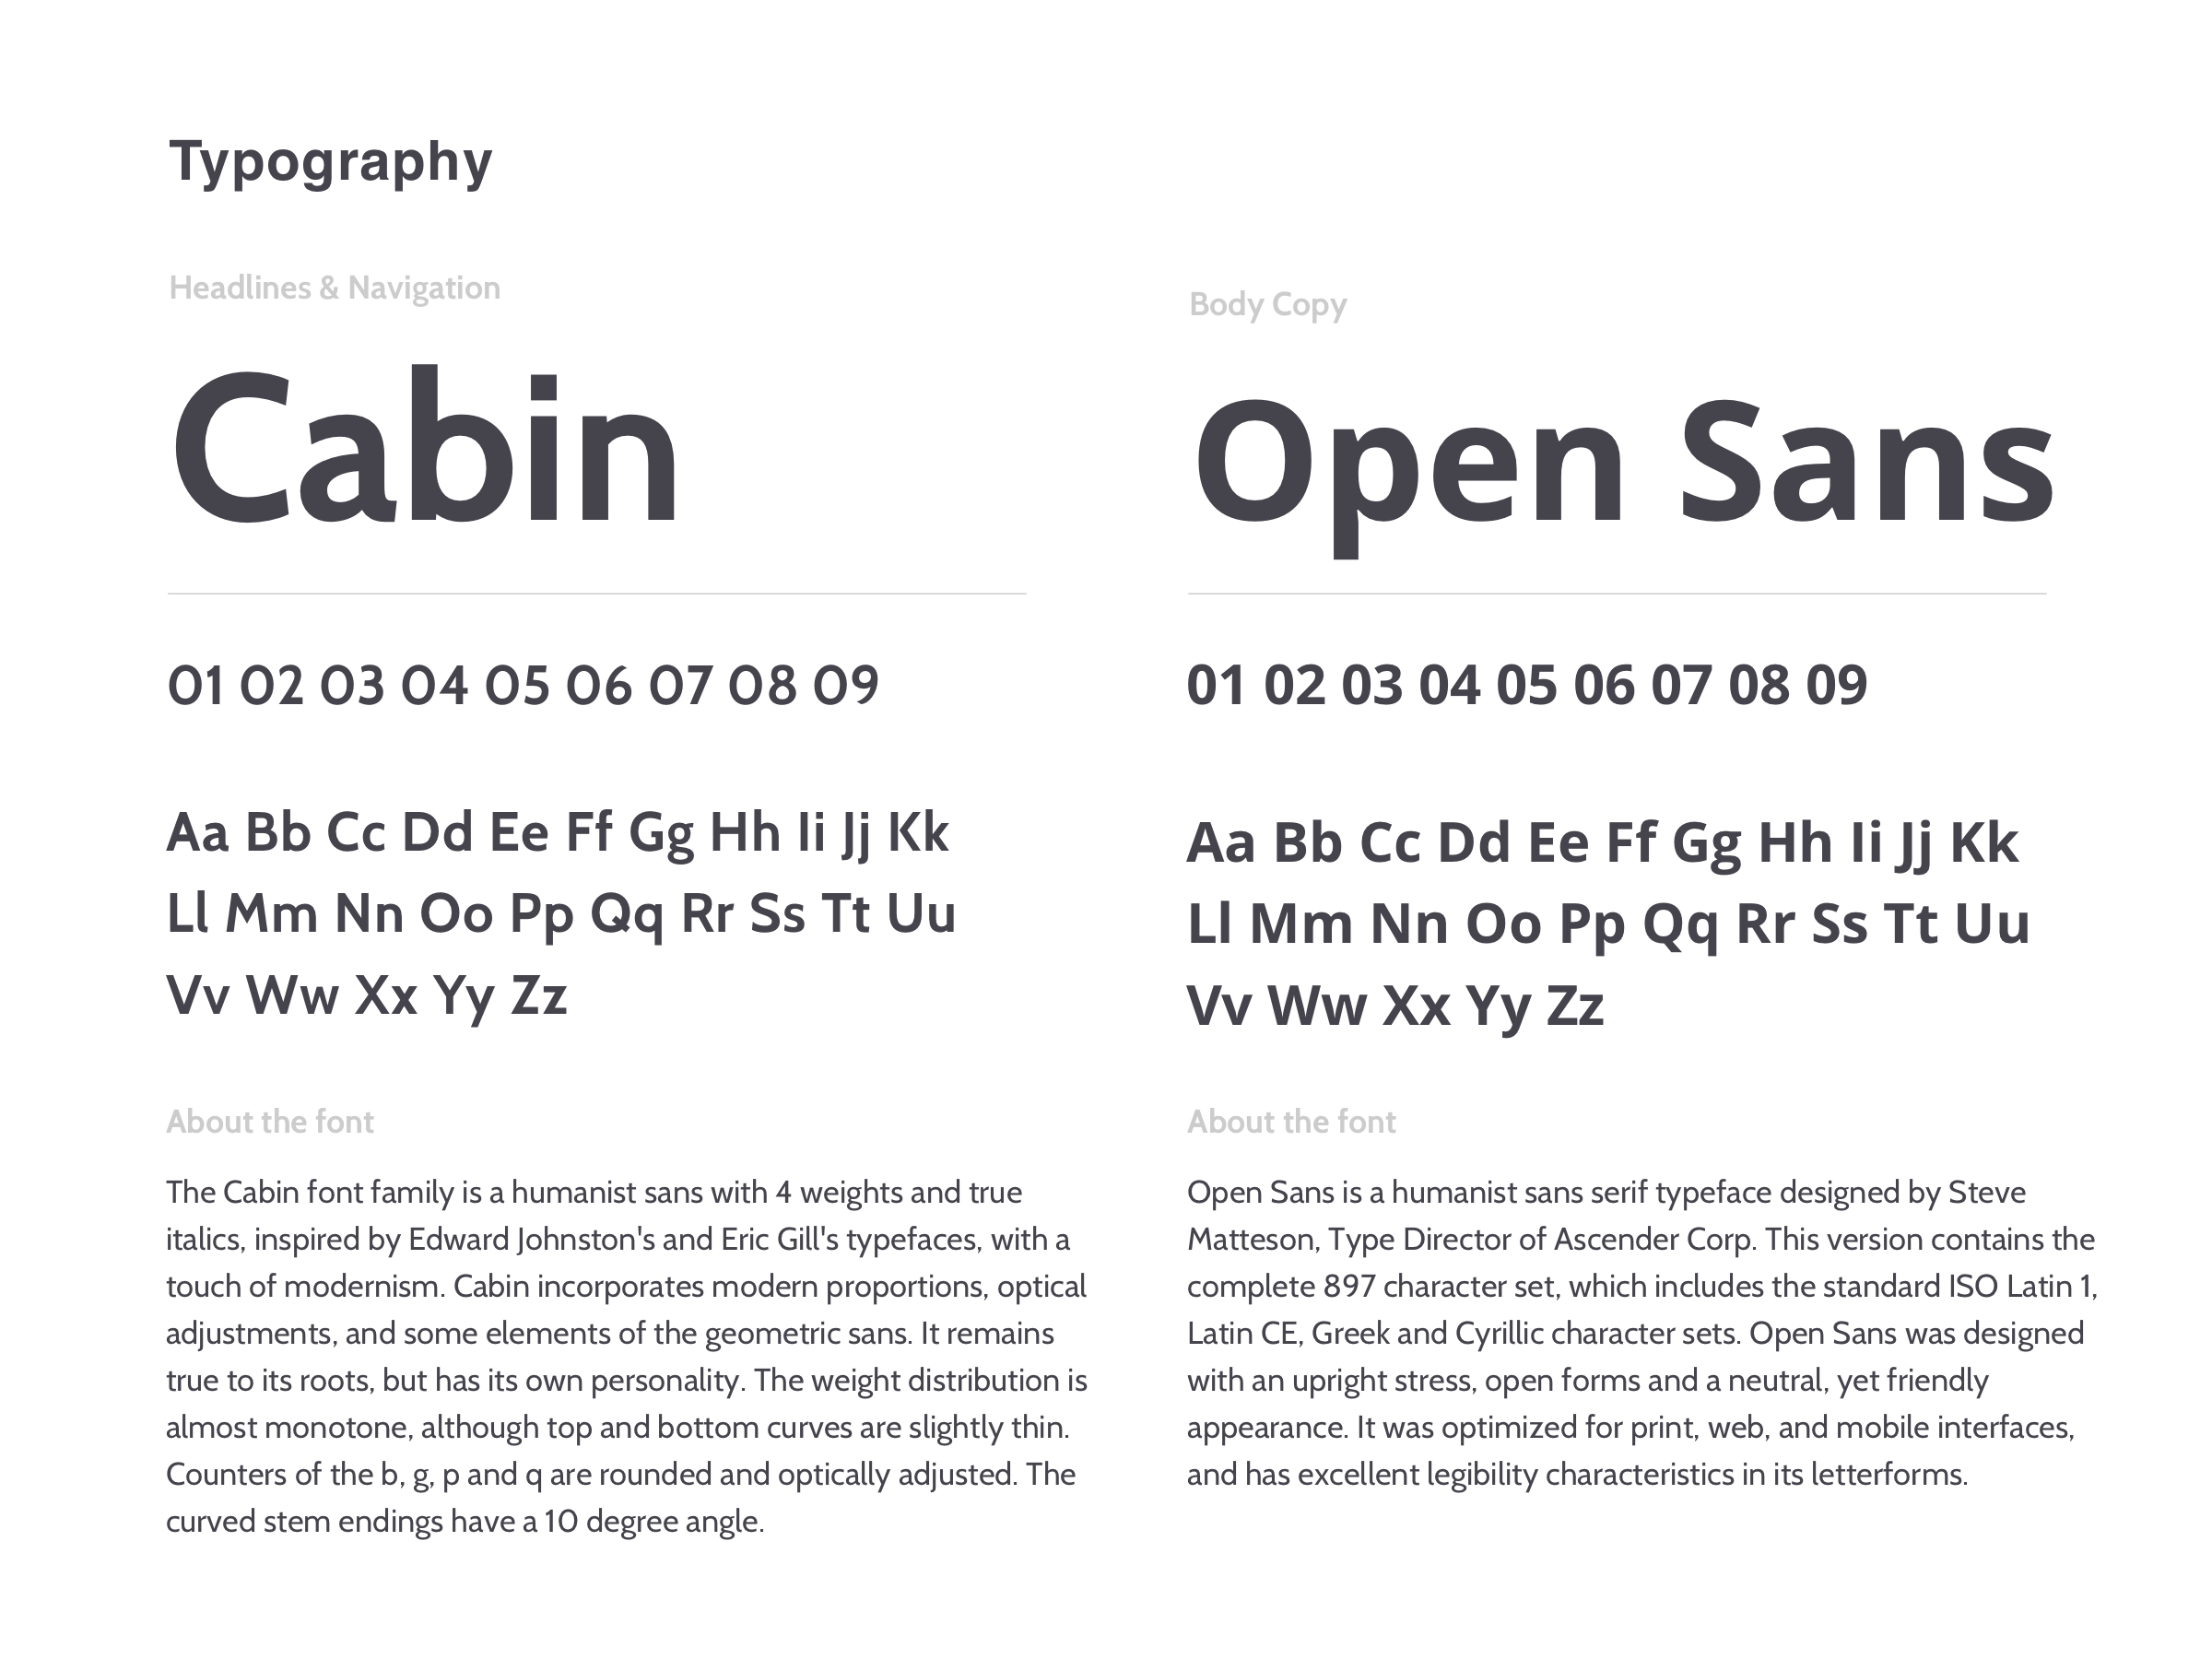 Typography Breakdown